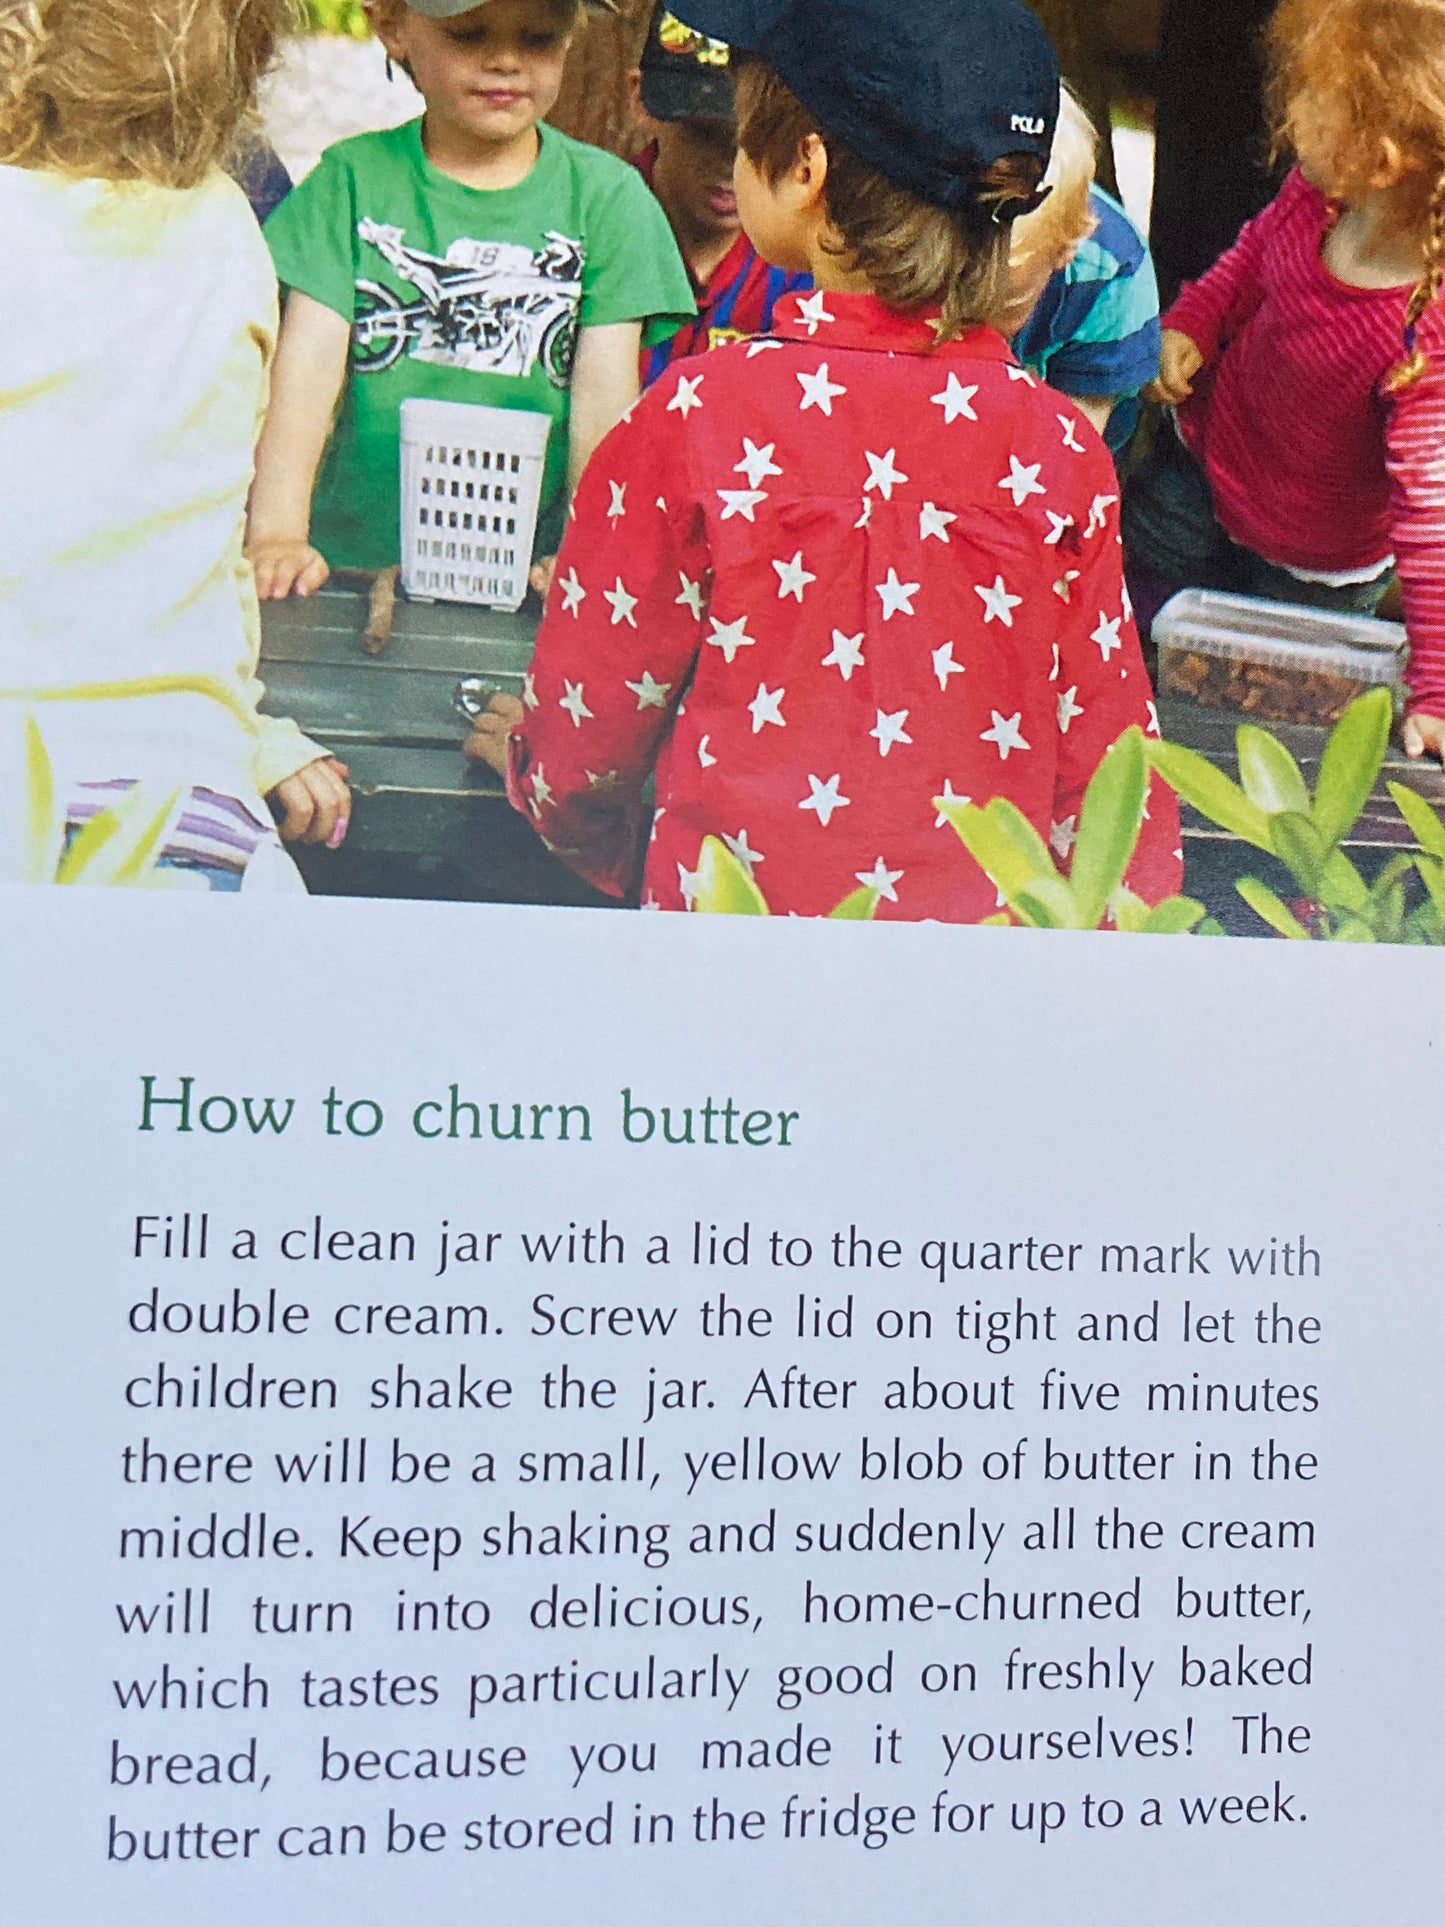 Parenting Resource Book - A WALDORF COOKBOOK, PUMPKIN SOUP & CHERRY BREAD